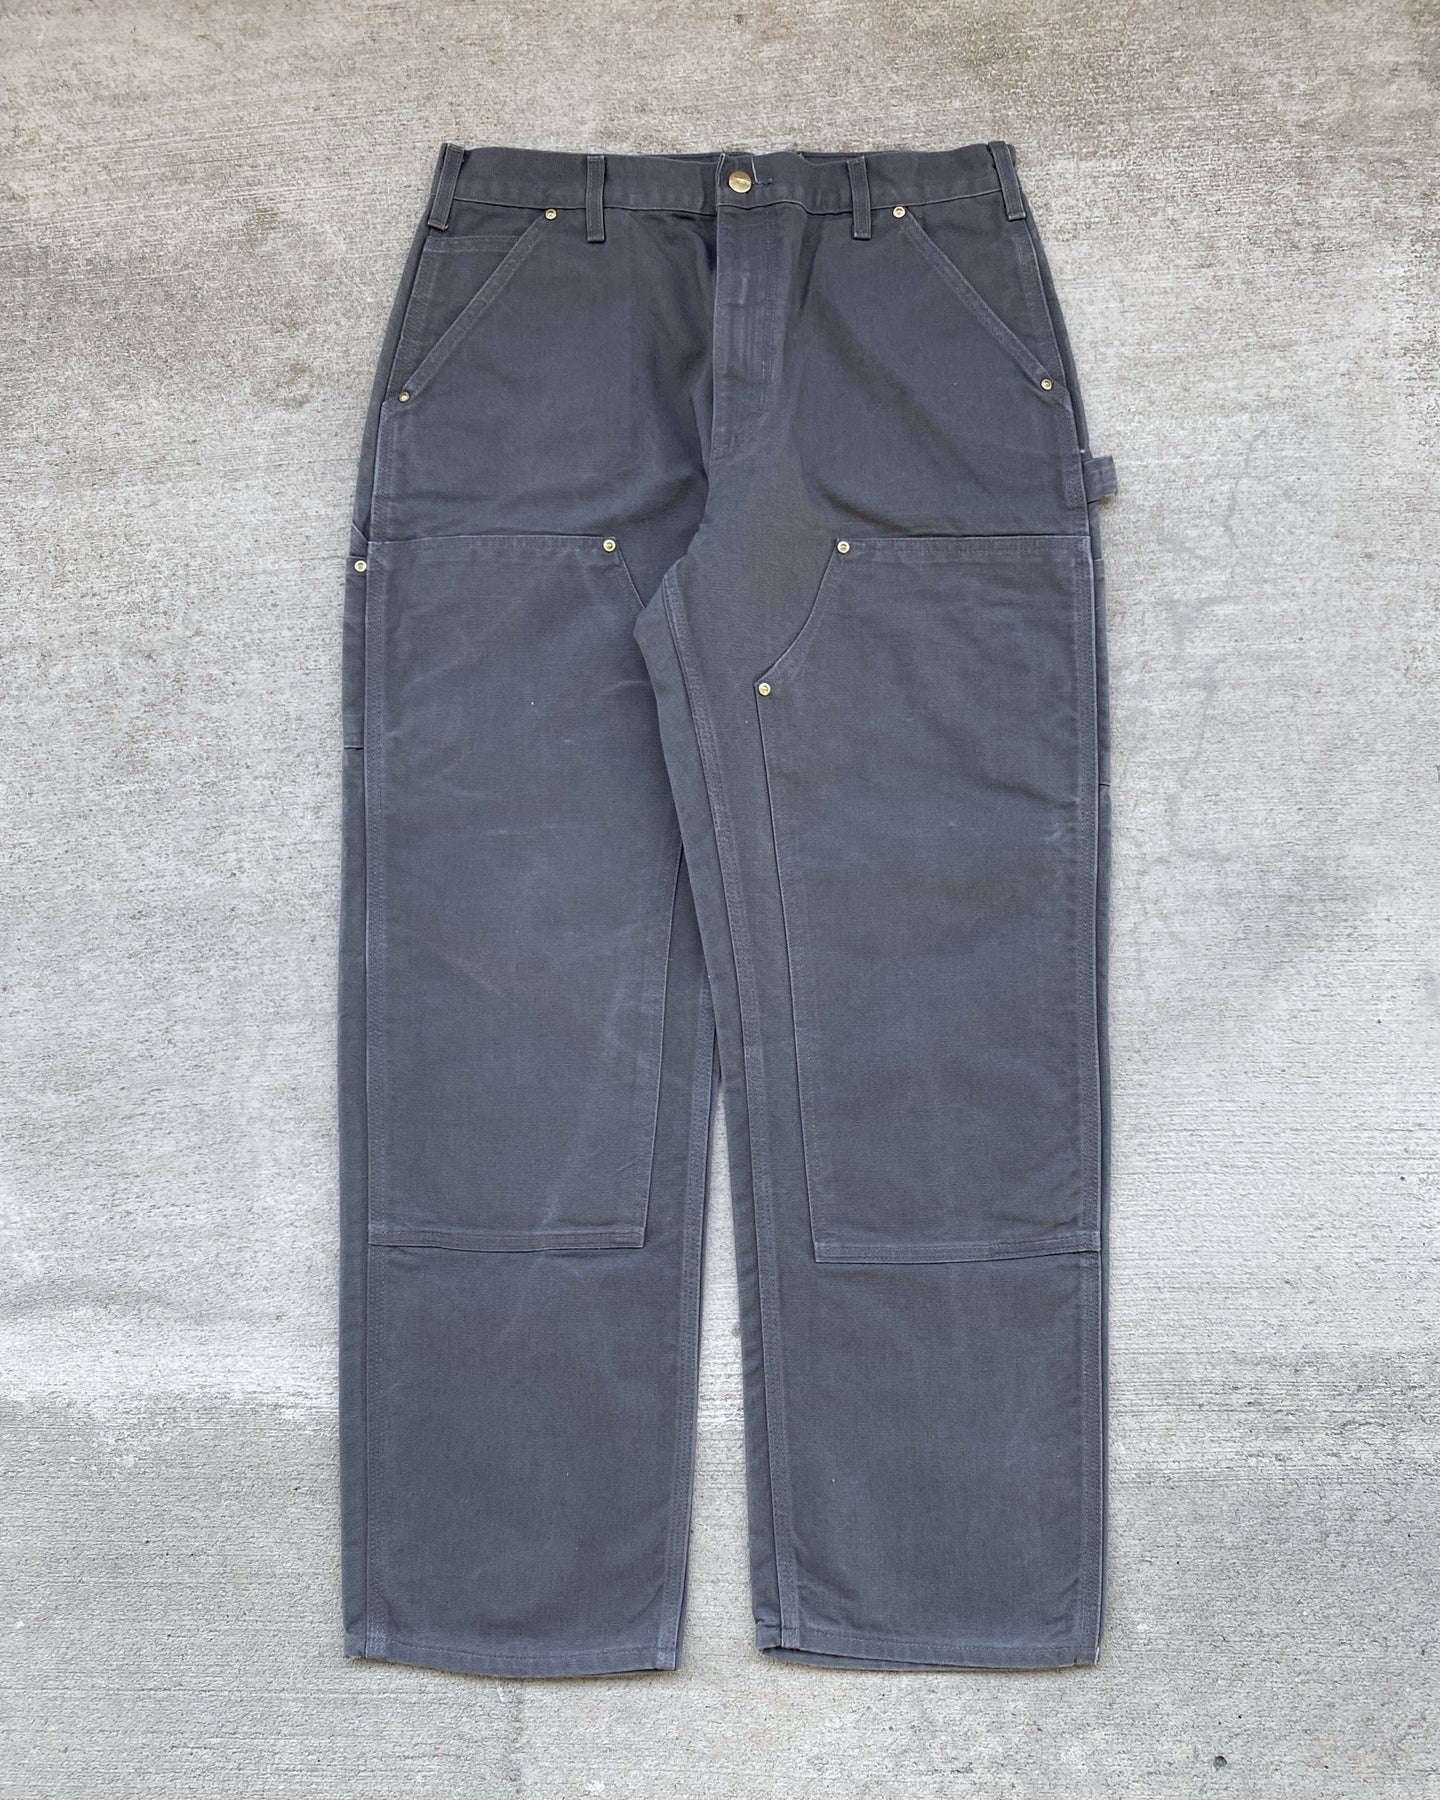 1990s Carhartt Gravel Grey Double Knee Pants - Size 32 x 30